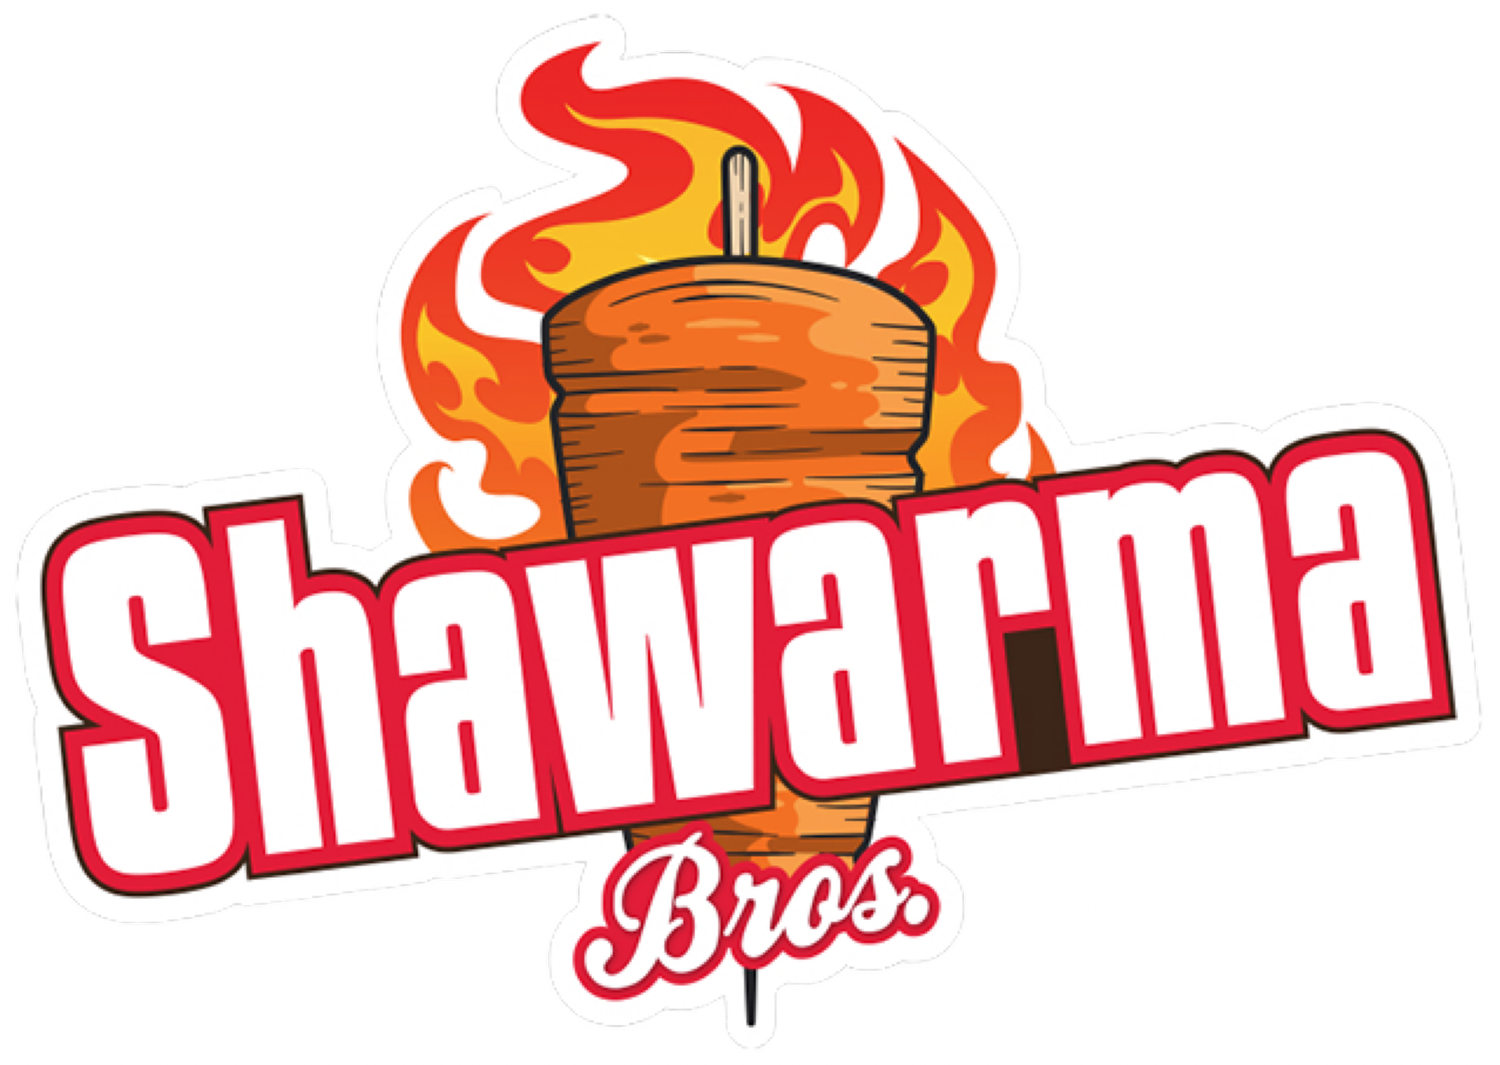 Shawarma Bros